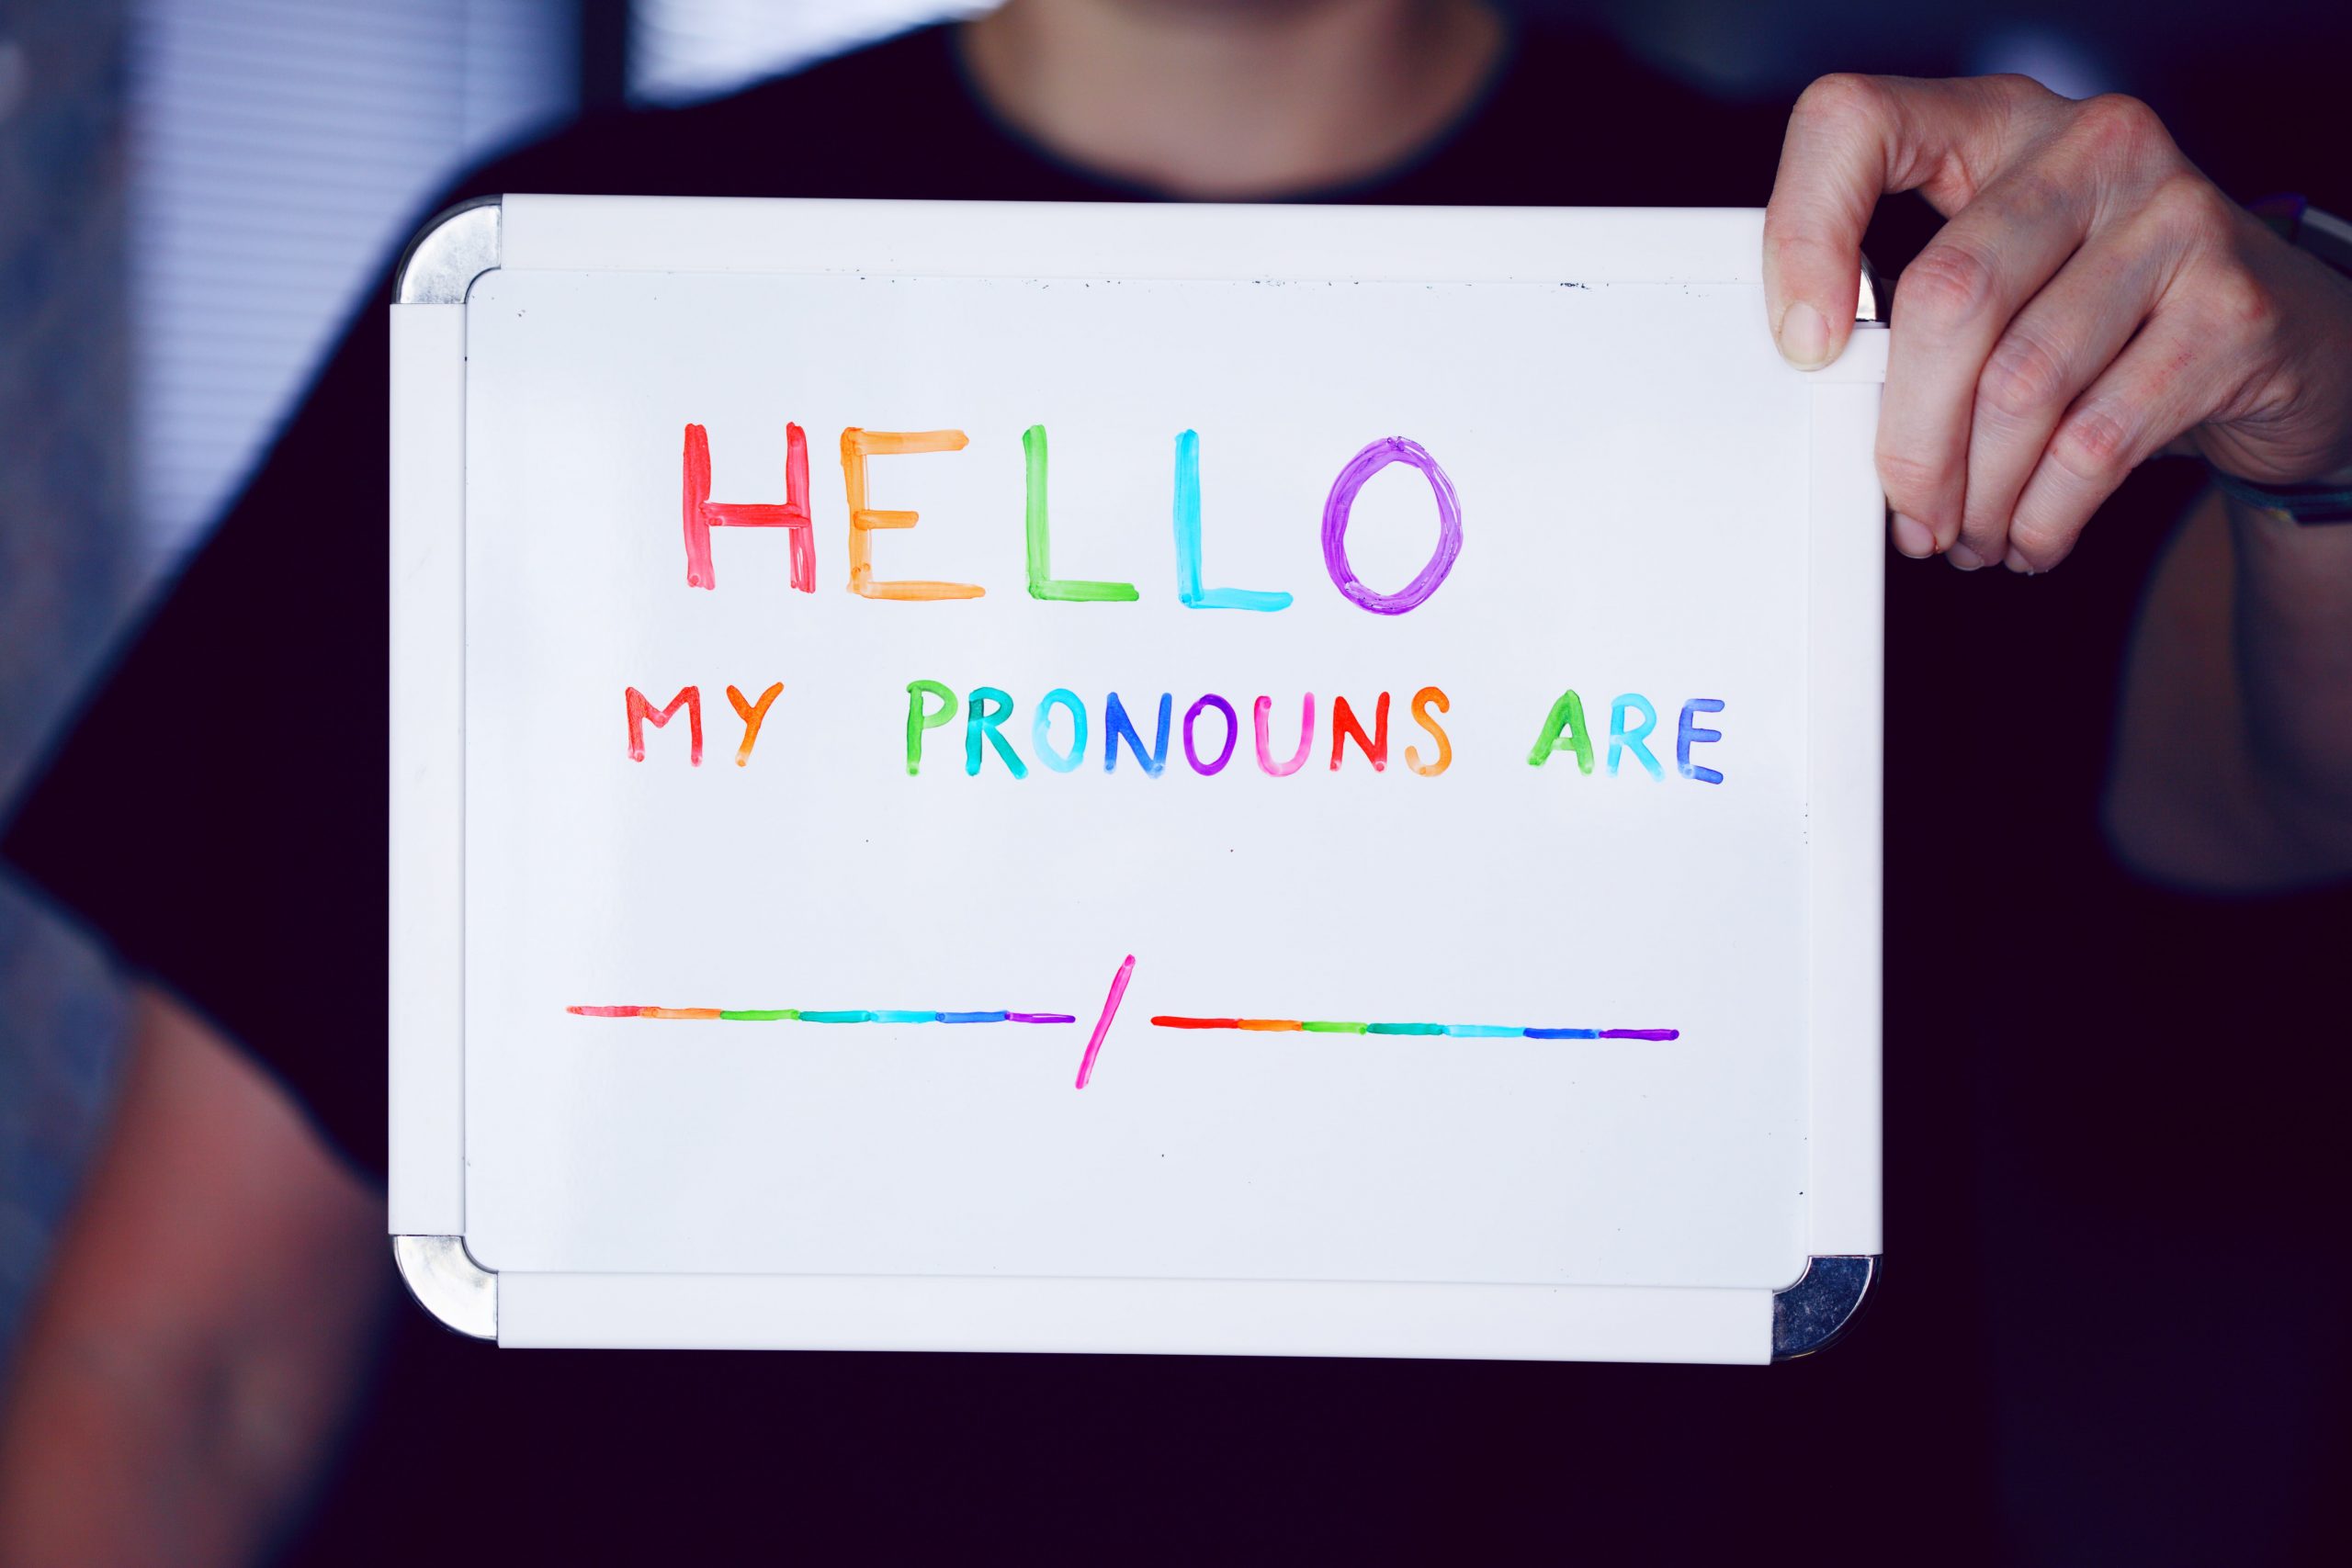 Pronouns Professor wins